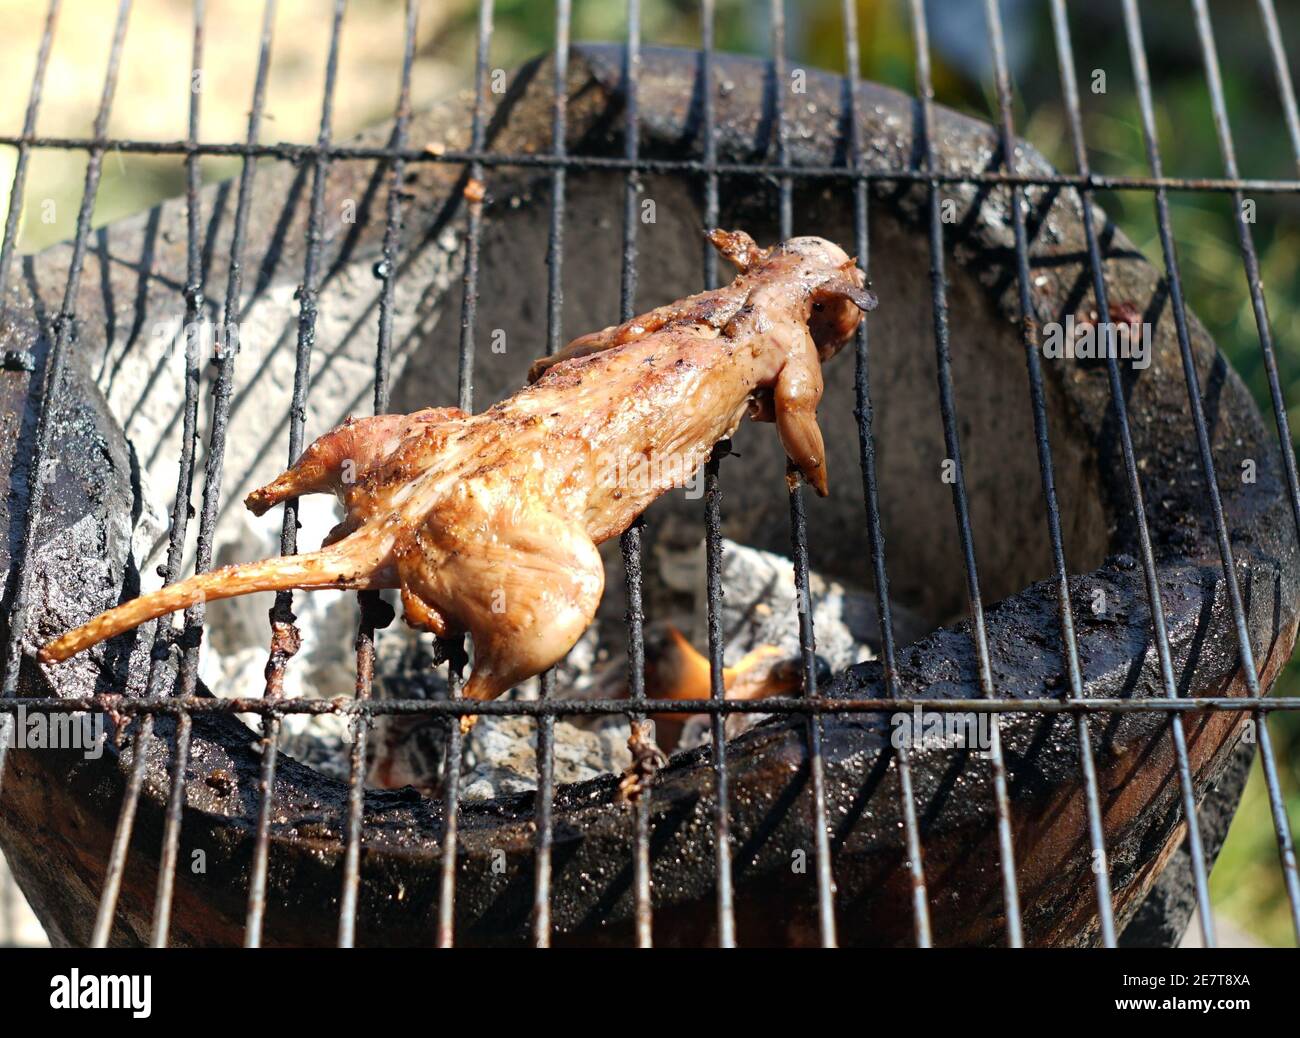 close-up-a-roast-rat-on-a-grill-grate-2E7T8XA.jpg